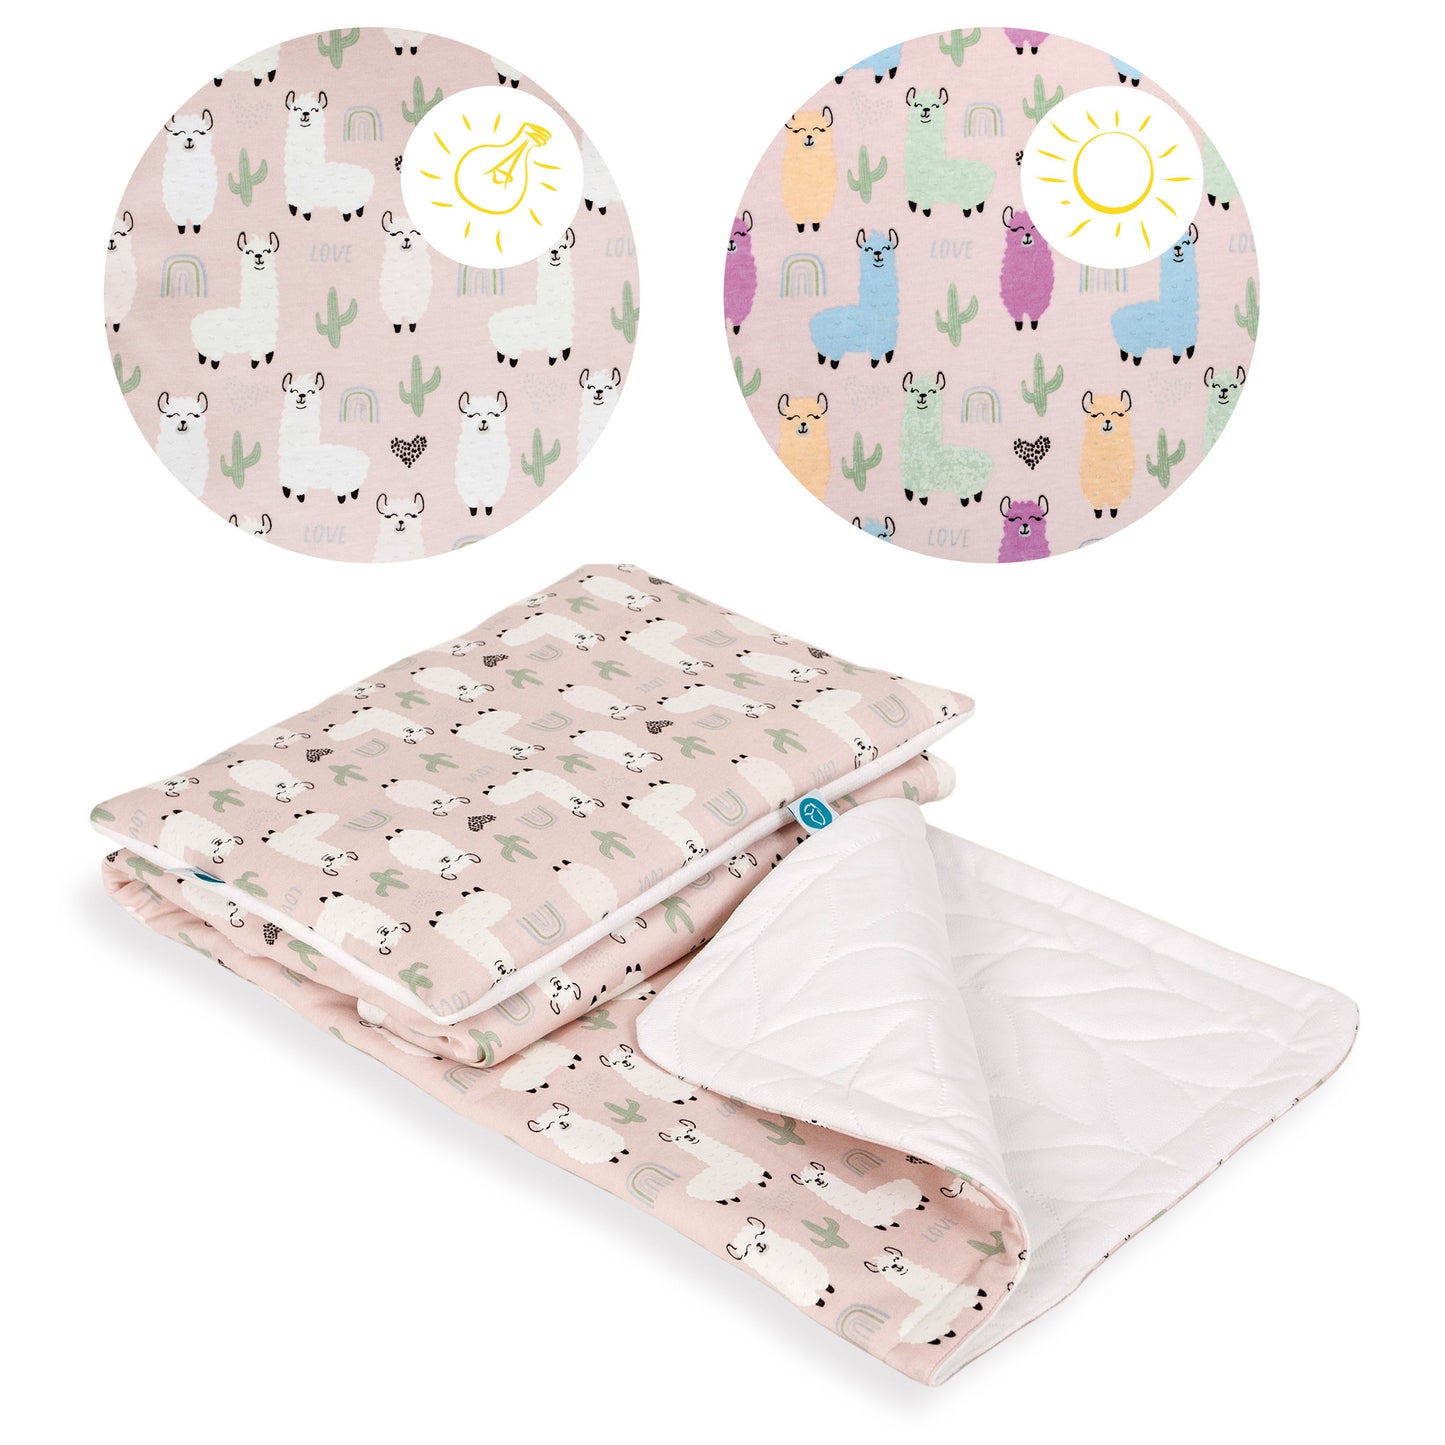 Children's blanket (75x100) + pillow (30x40)